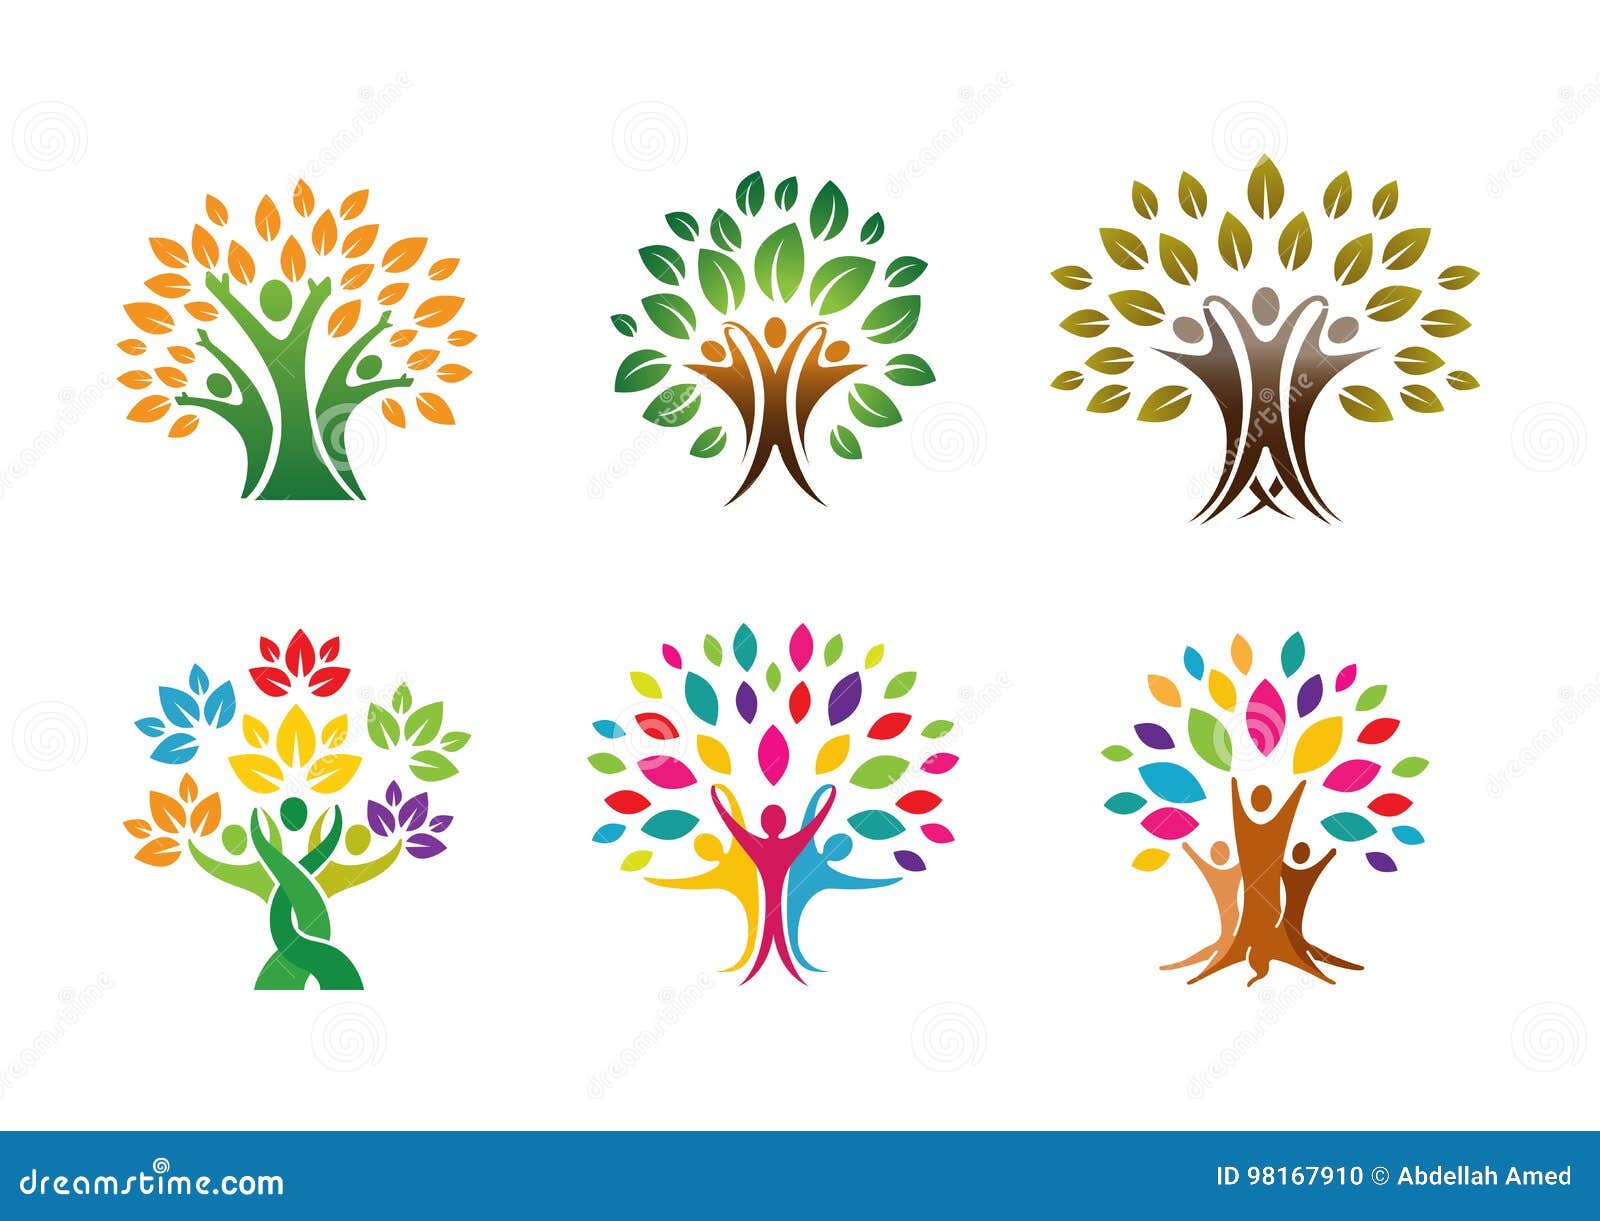 https://thumbs.dreamstime.com/z/creative-three-people-tree-logo-design-illustration-creative-three-people-tree-logo-design-symbol-illustration-98167910.jpg